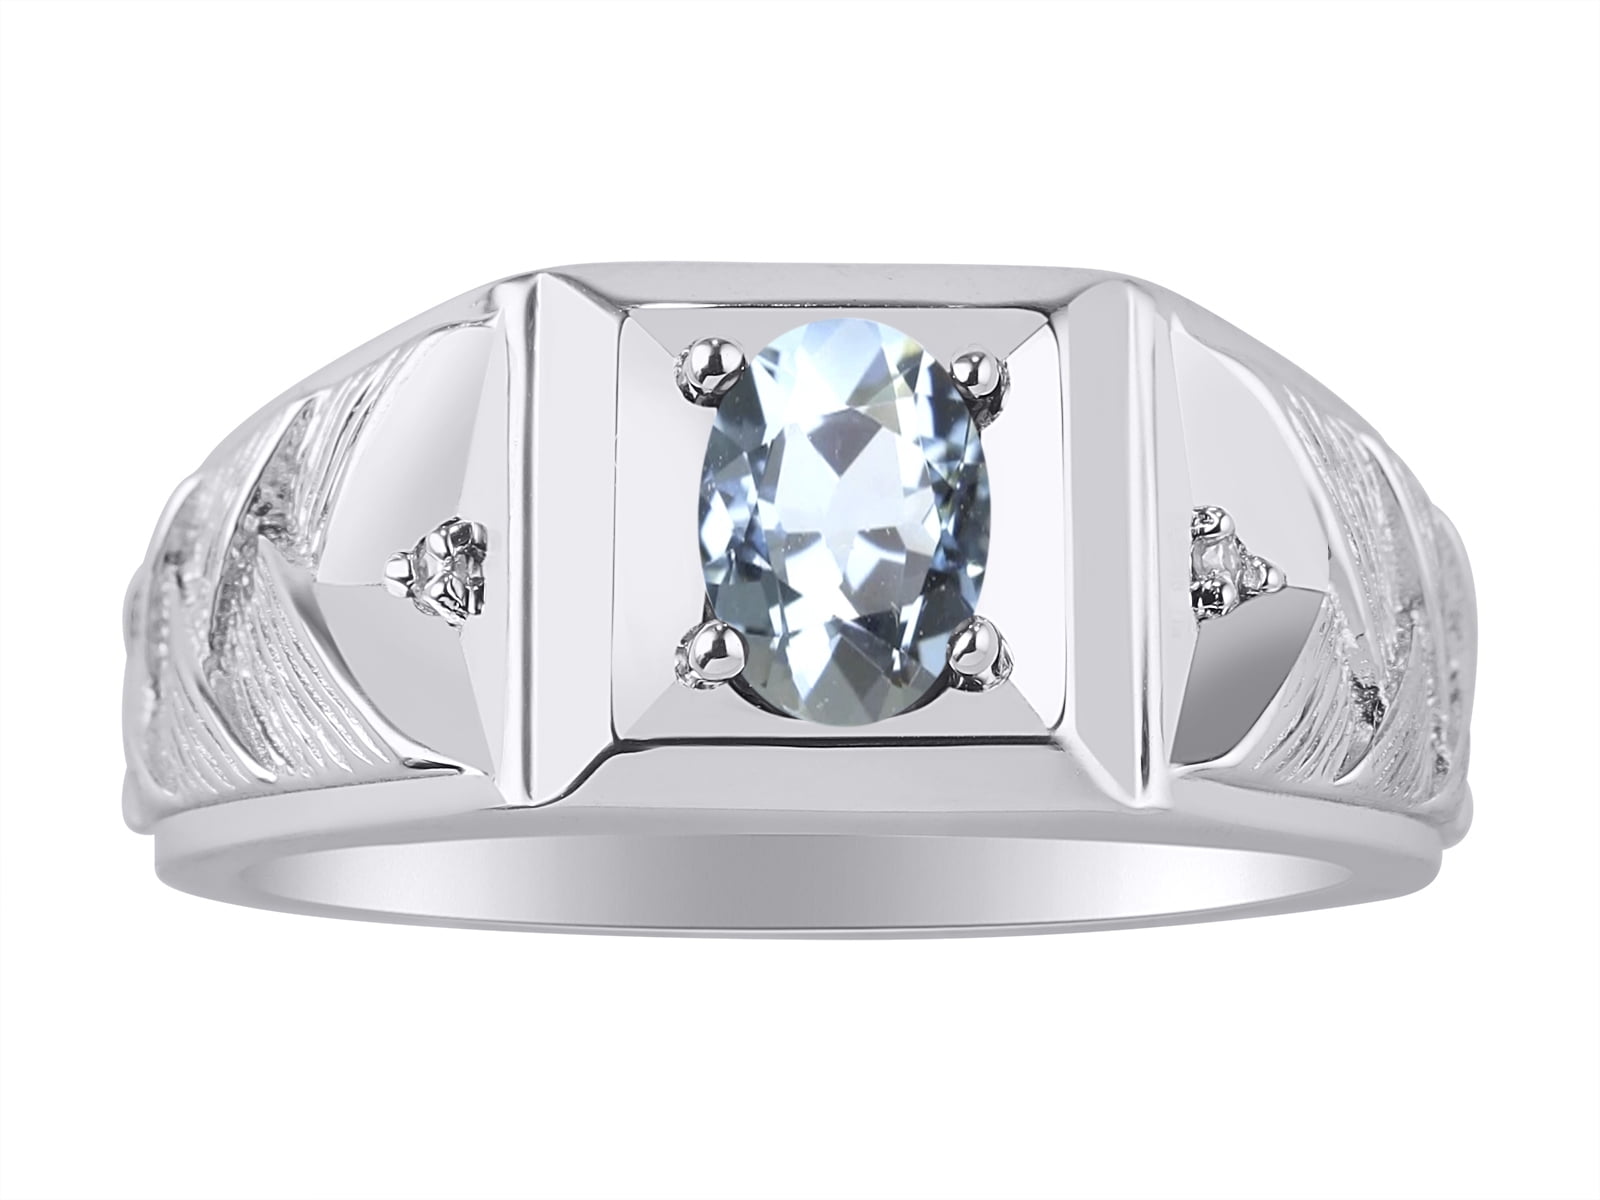 RYLOS Simply Elegant Beautiful Aquamarine & Diamond Ring March Birthstone 